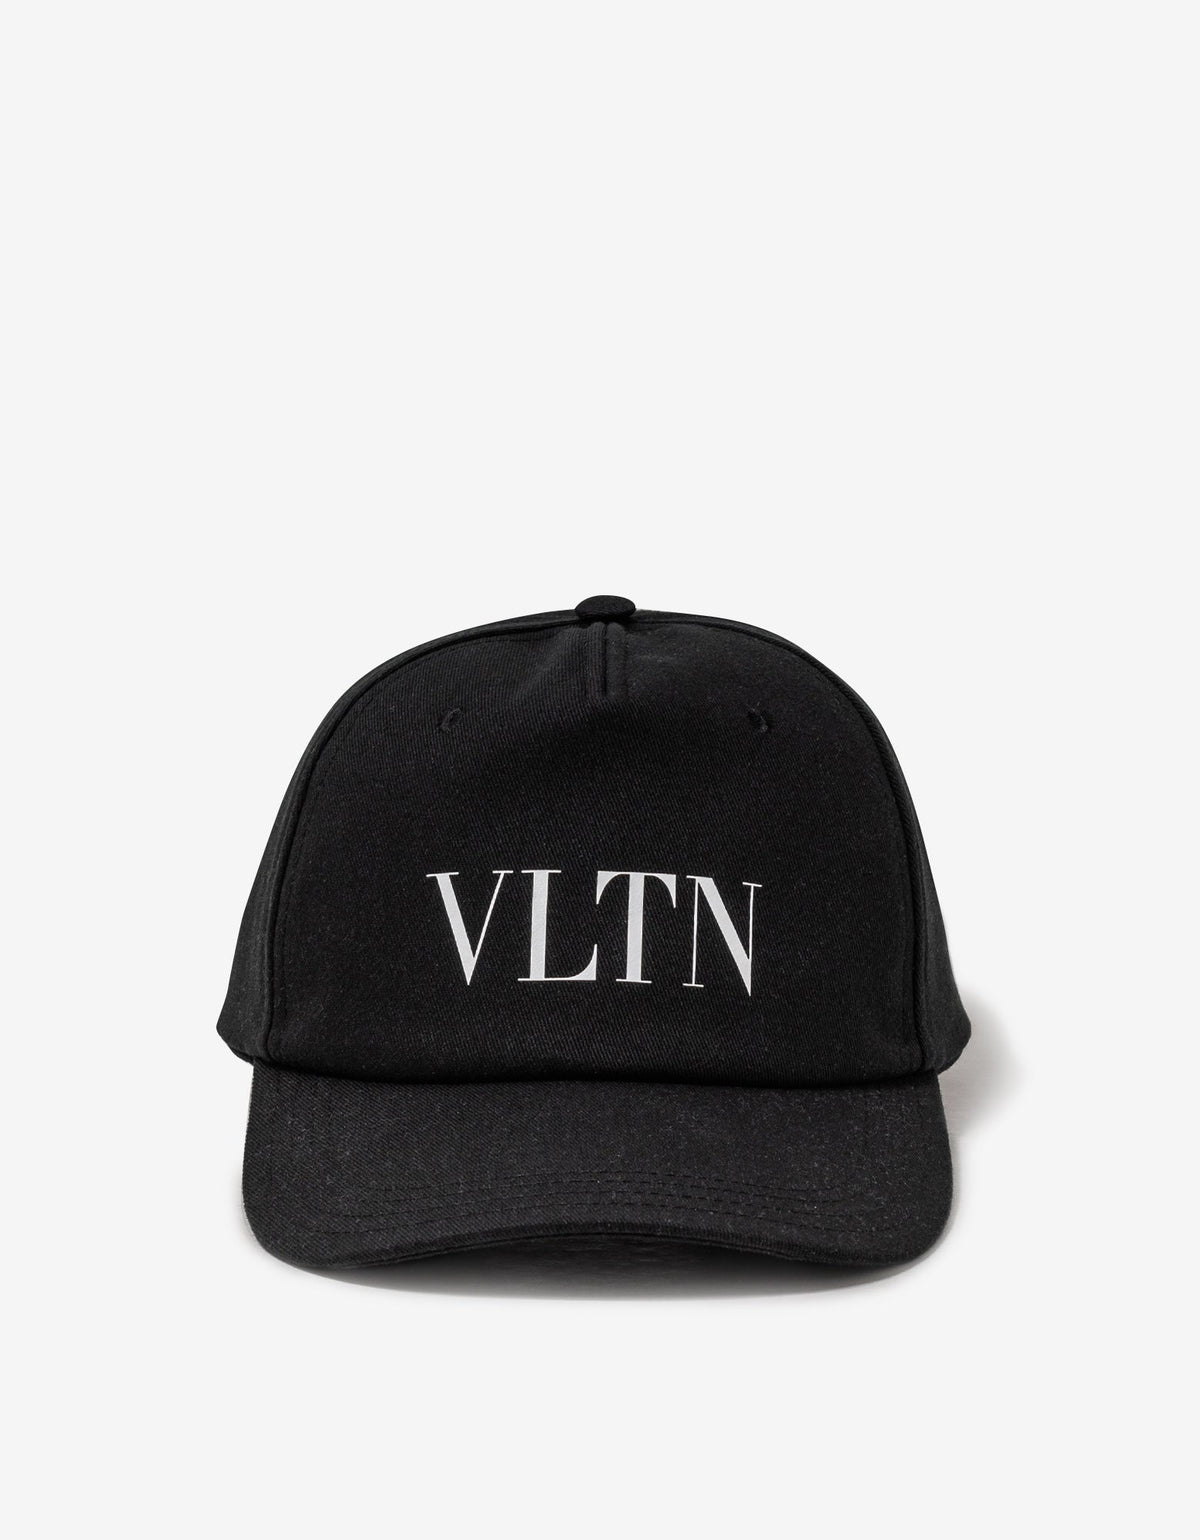 Valentino Black VLTN Baseball Cap